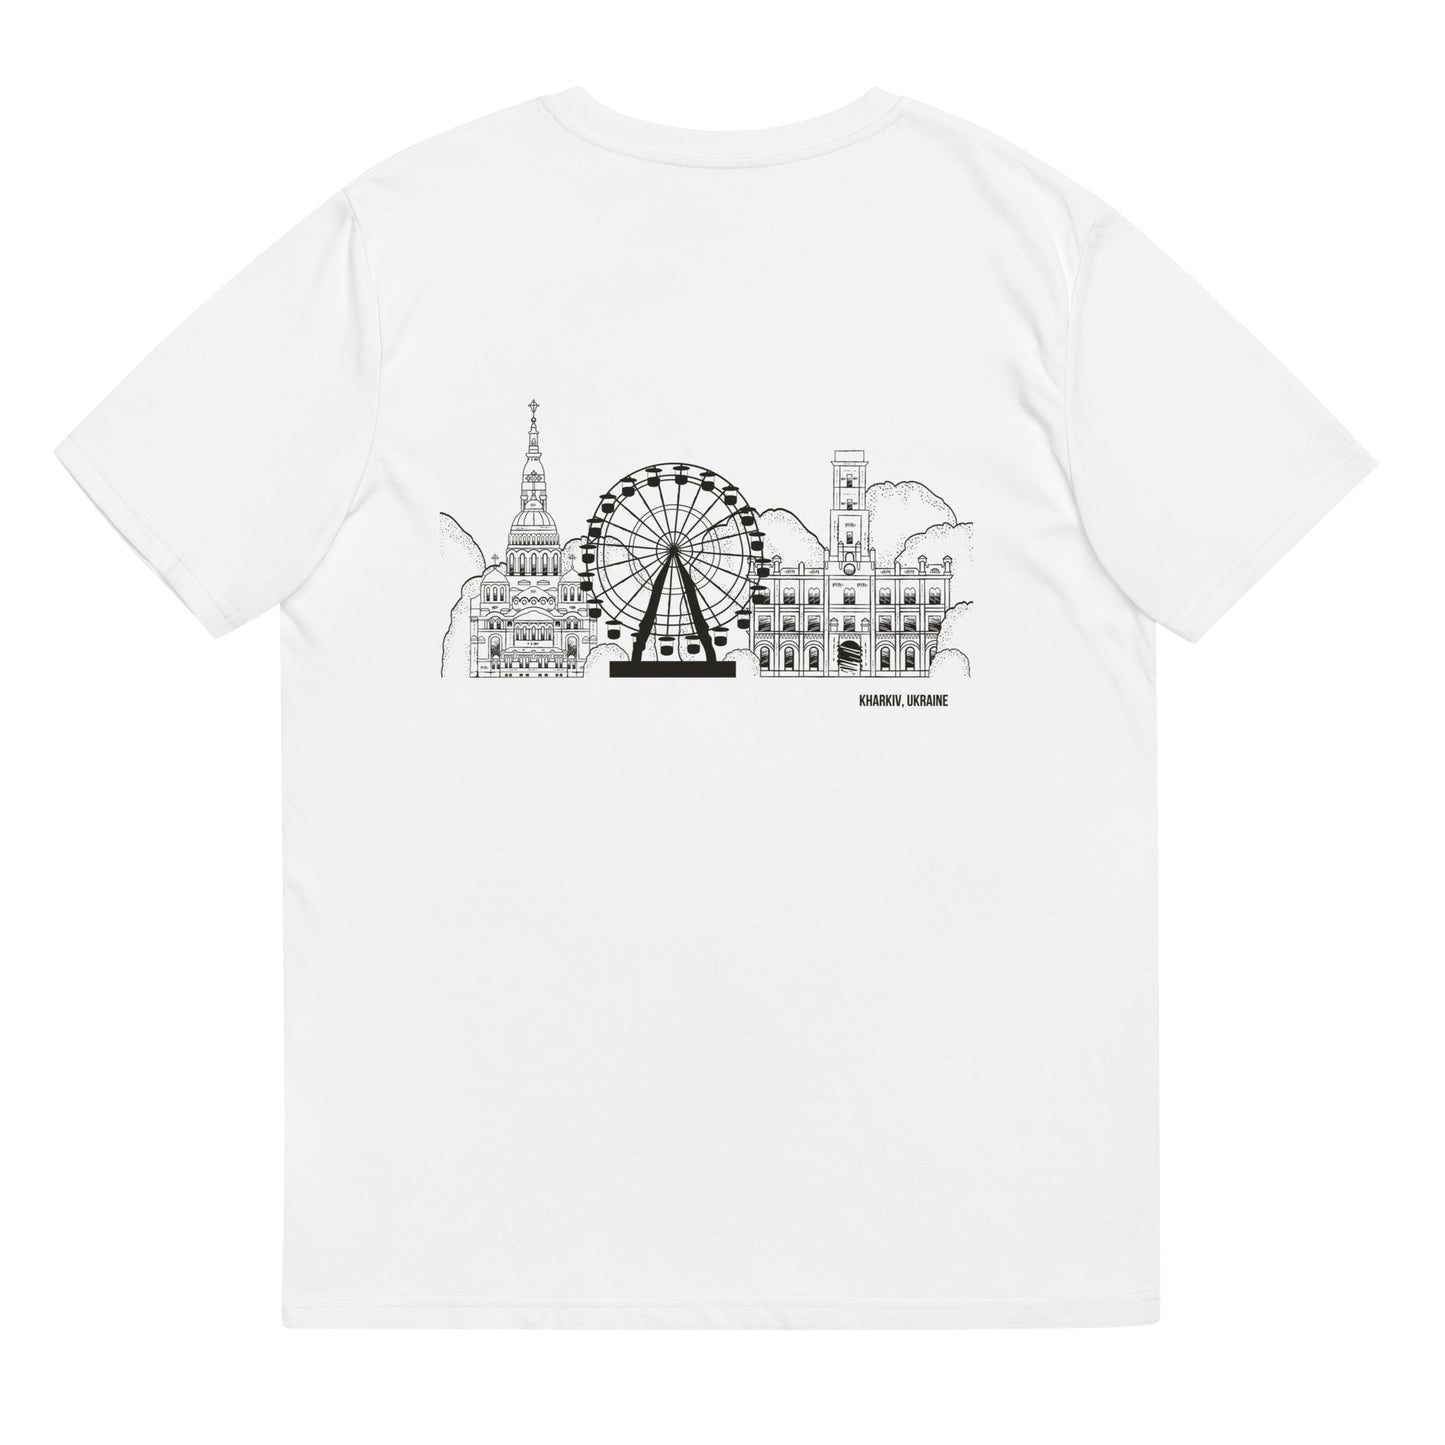 The Kharkiv T-Shirt Unisex